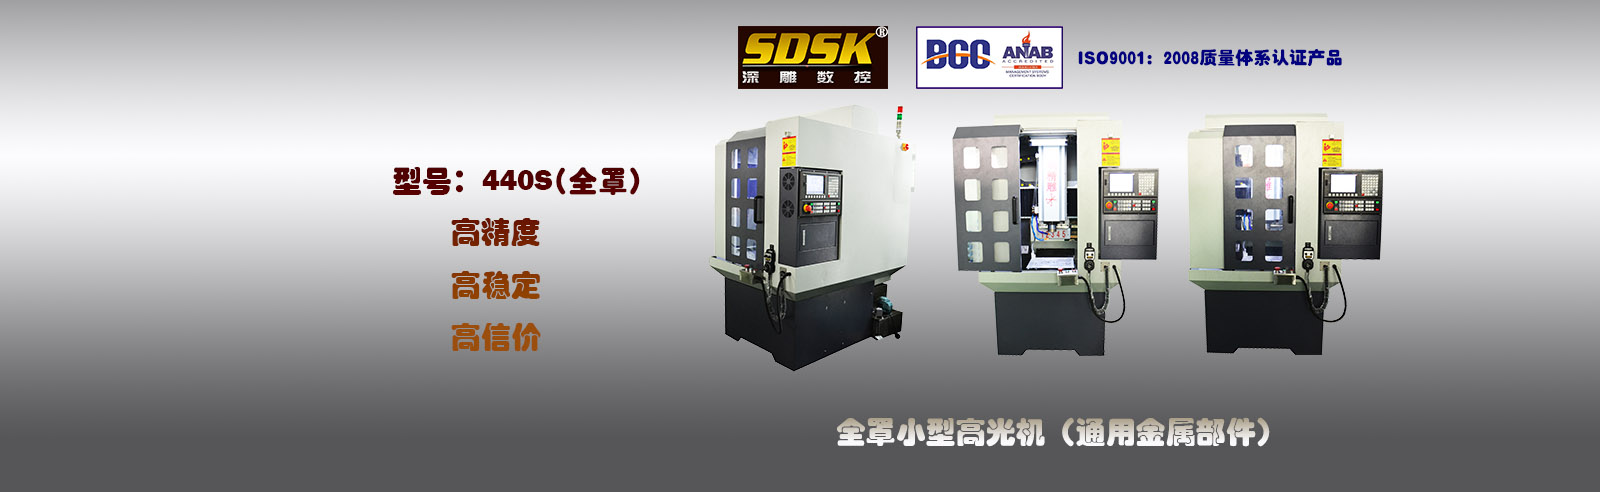 How to measure the reliability of CNC machine tools? Shenzhen Jingdiao